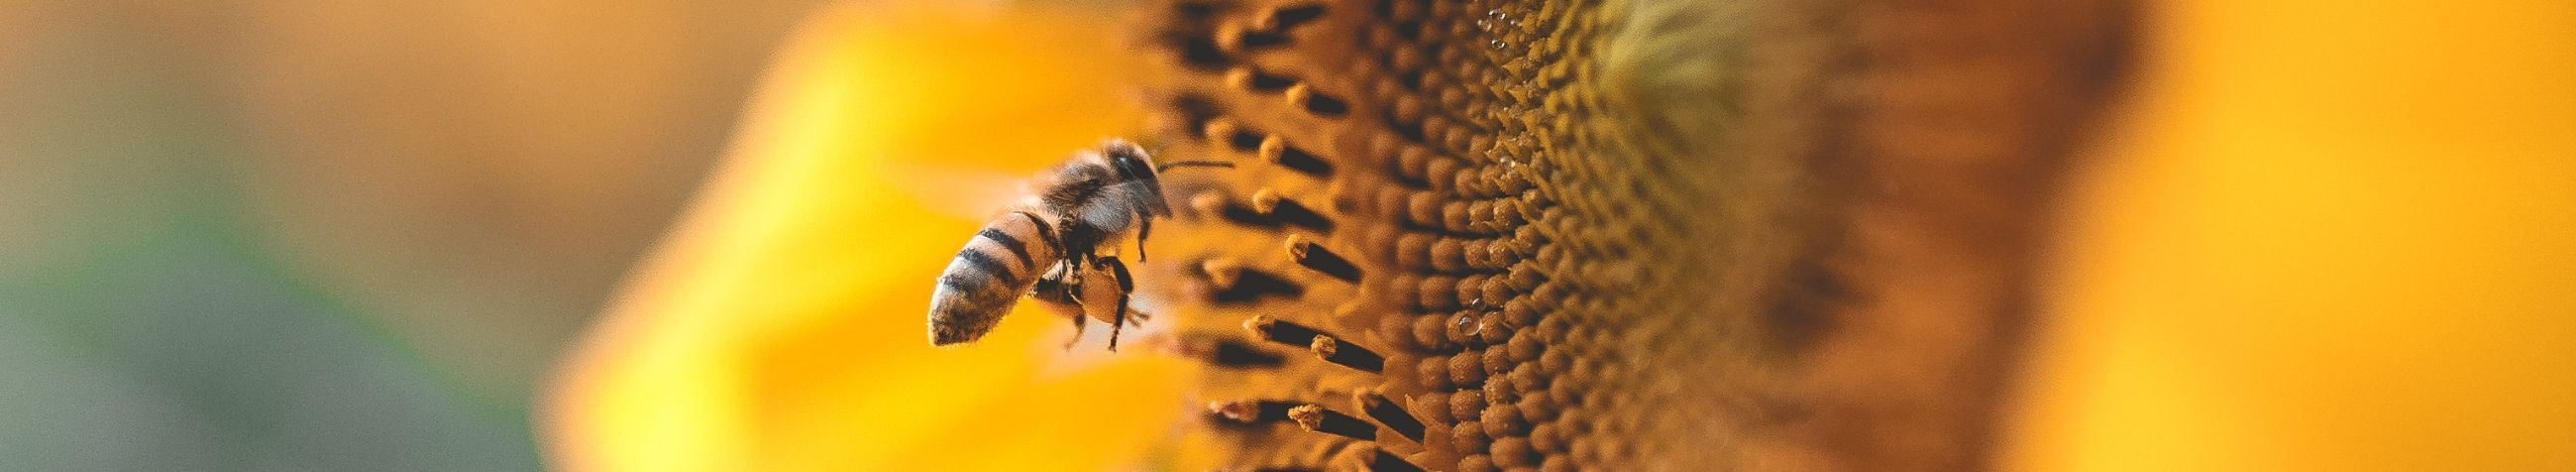 puhas mesi, e-pood, tatra mesi, kanarbiku mesi, suveõite mesi, kevadõite mesi, looduslik mesi, mesitooted, puhas mesi internetis, osta mett